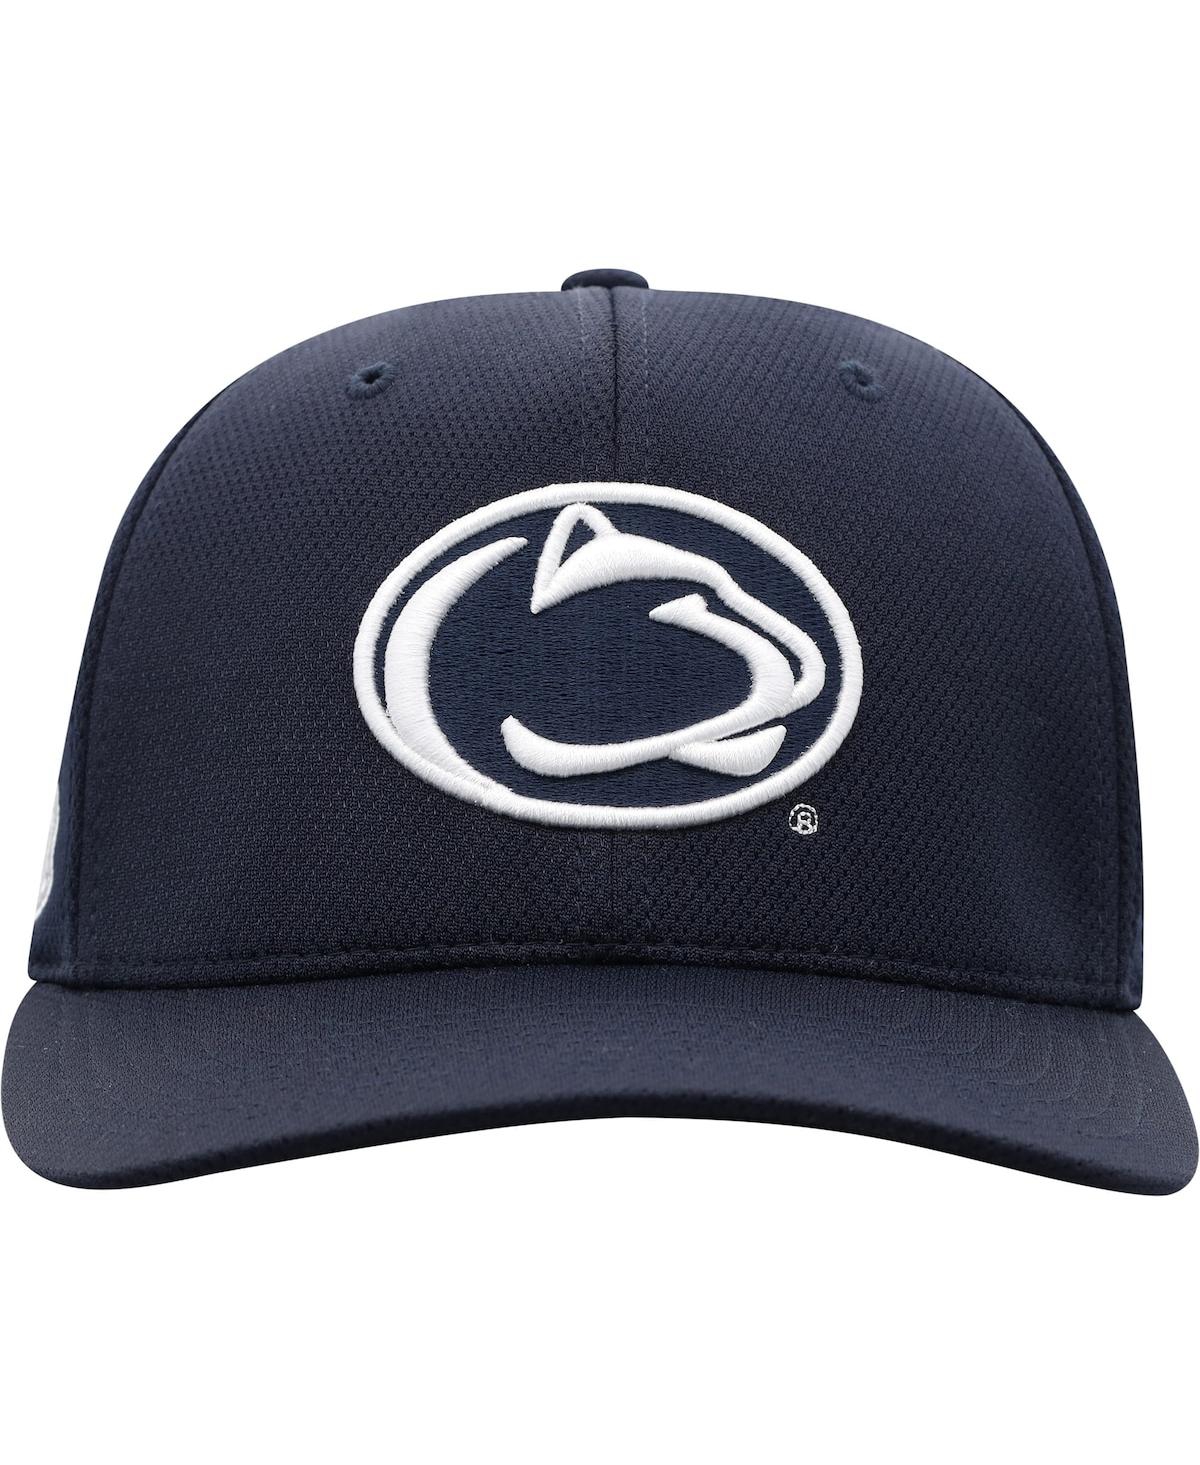 Shop Top Of The World Men's  Navy Penn State Nittany Lions Reflex Logo Flex Hat